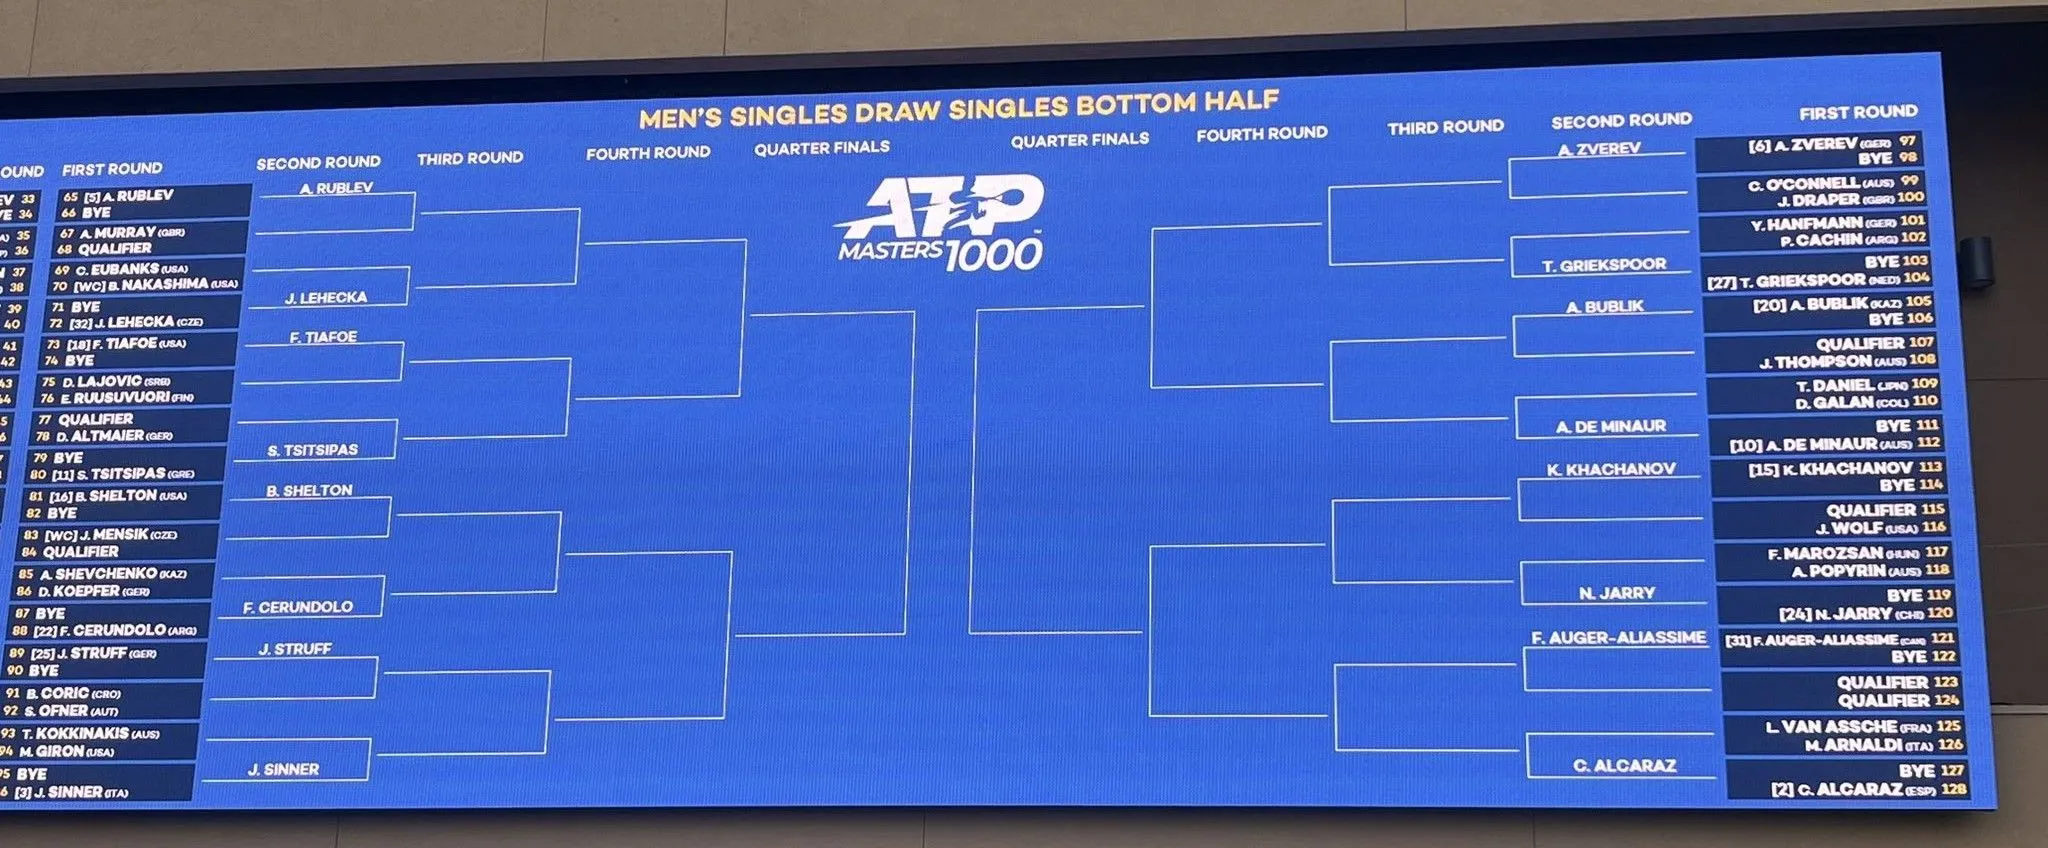 Bottom Half ATP Indian Wells Draw